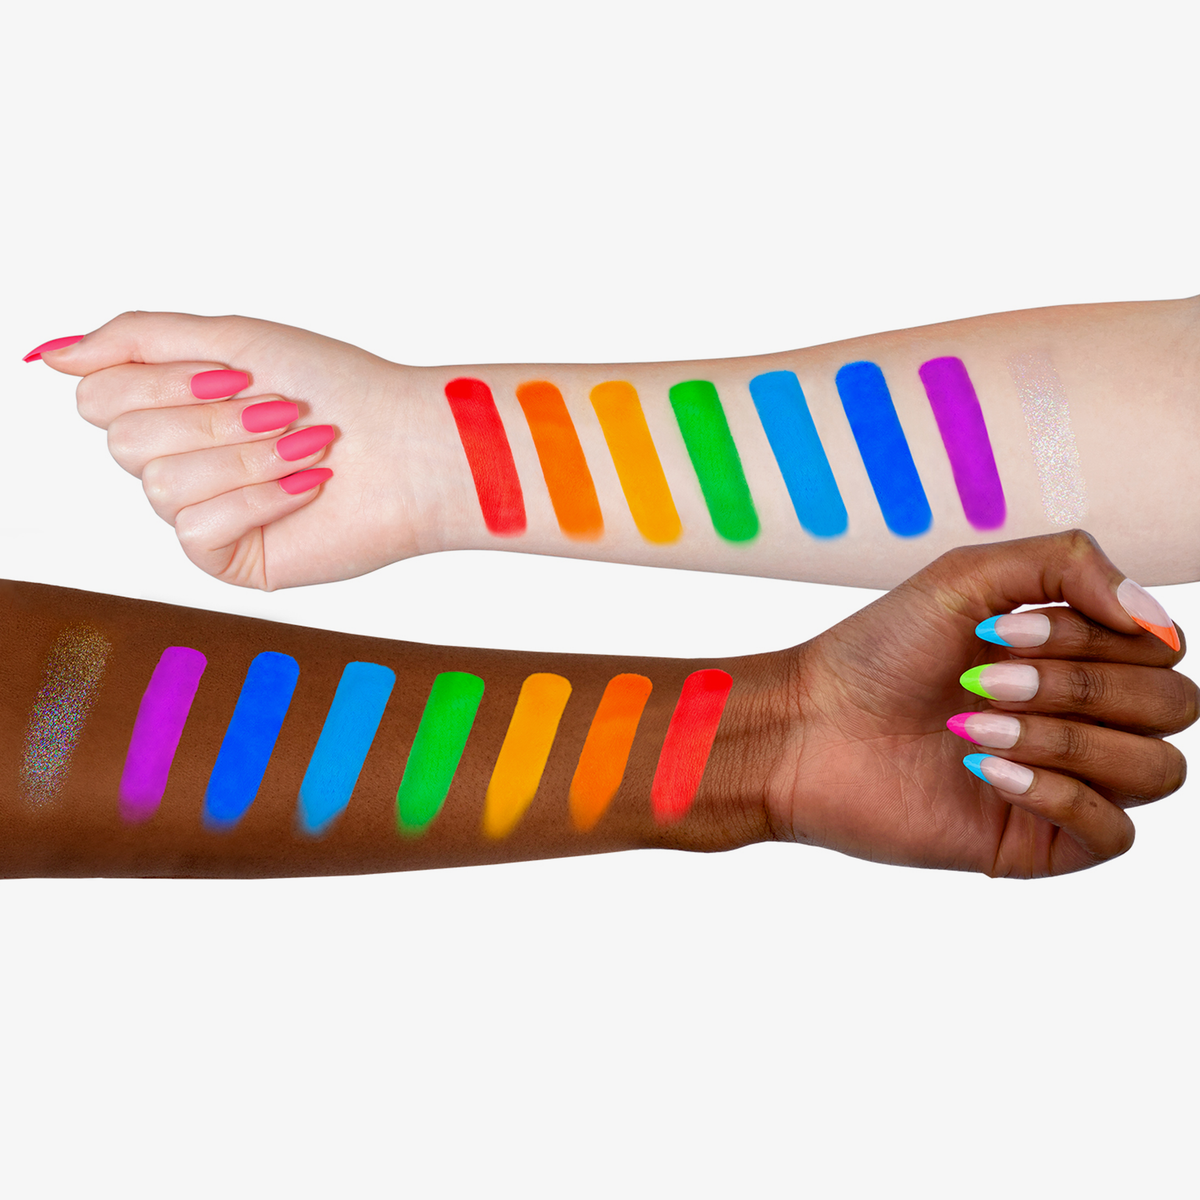 SUVA Beauty | We Make Rainbows Jealous Palette